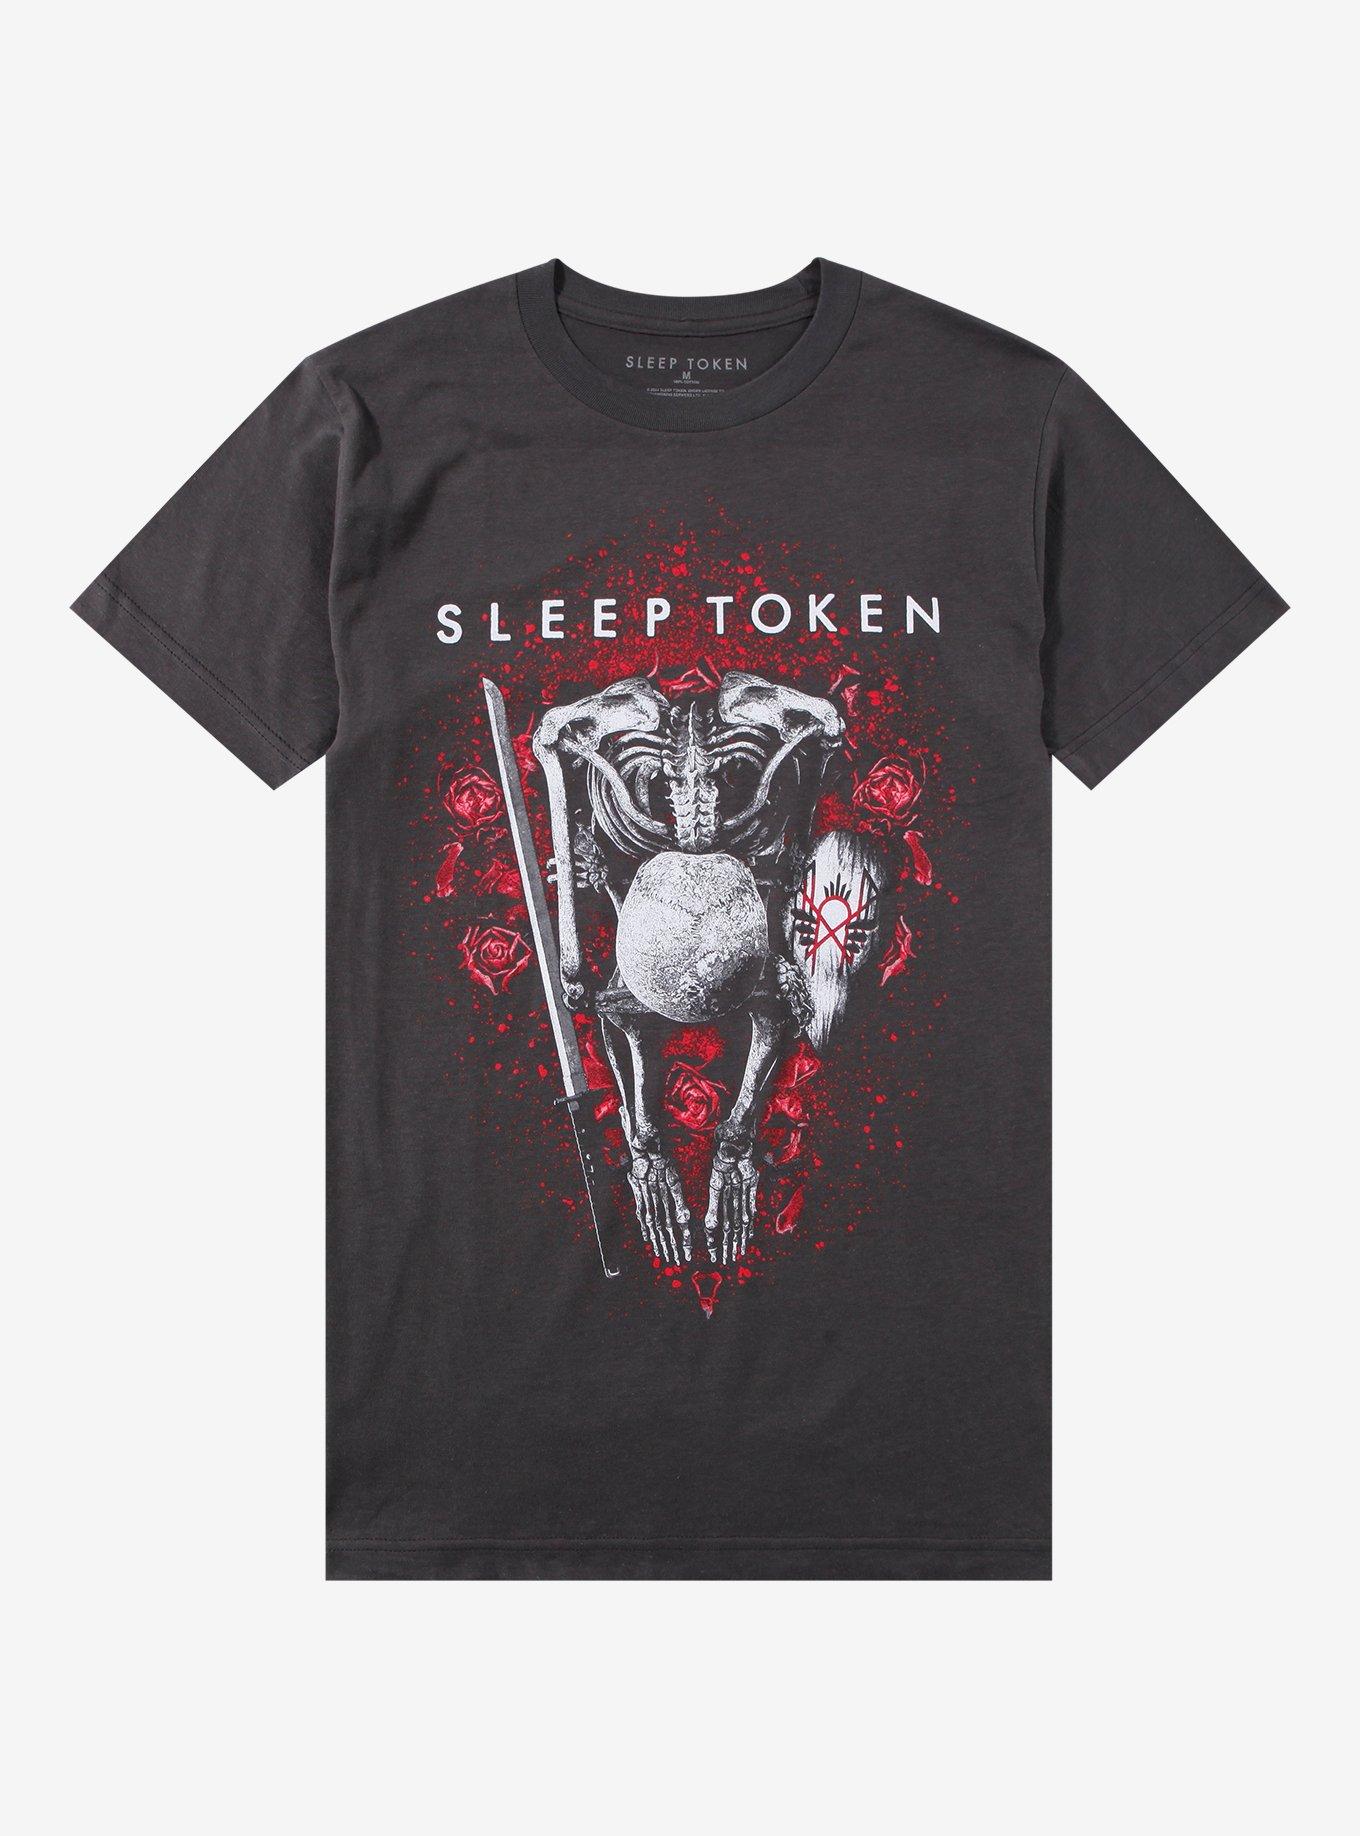 Sleep Token Skeleton Roses Boyfriend Fit Girls T-Shirt, , hi-res